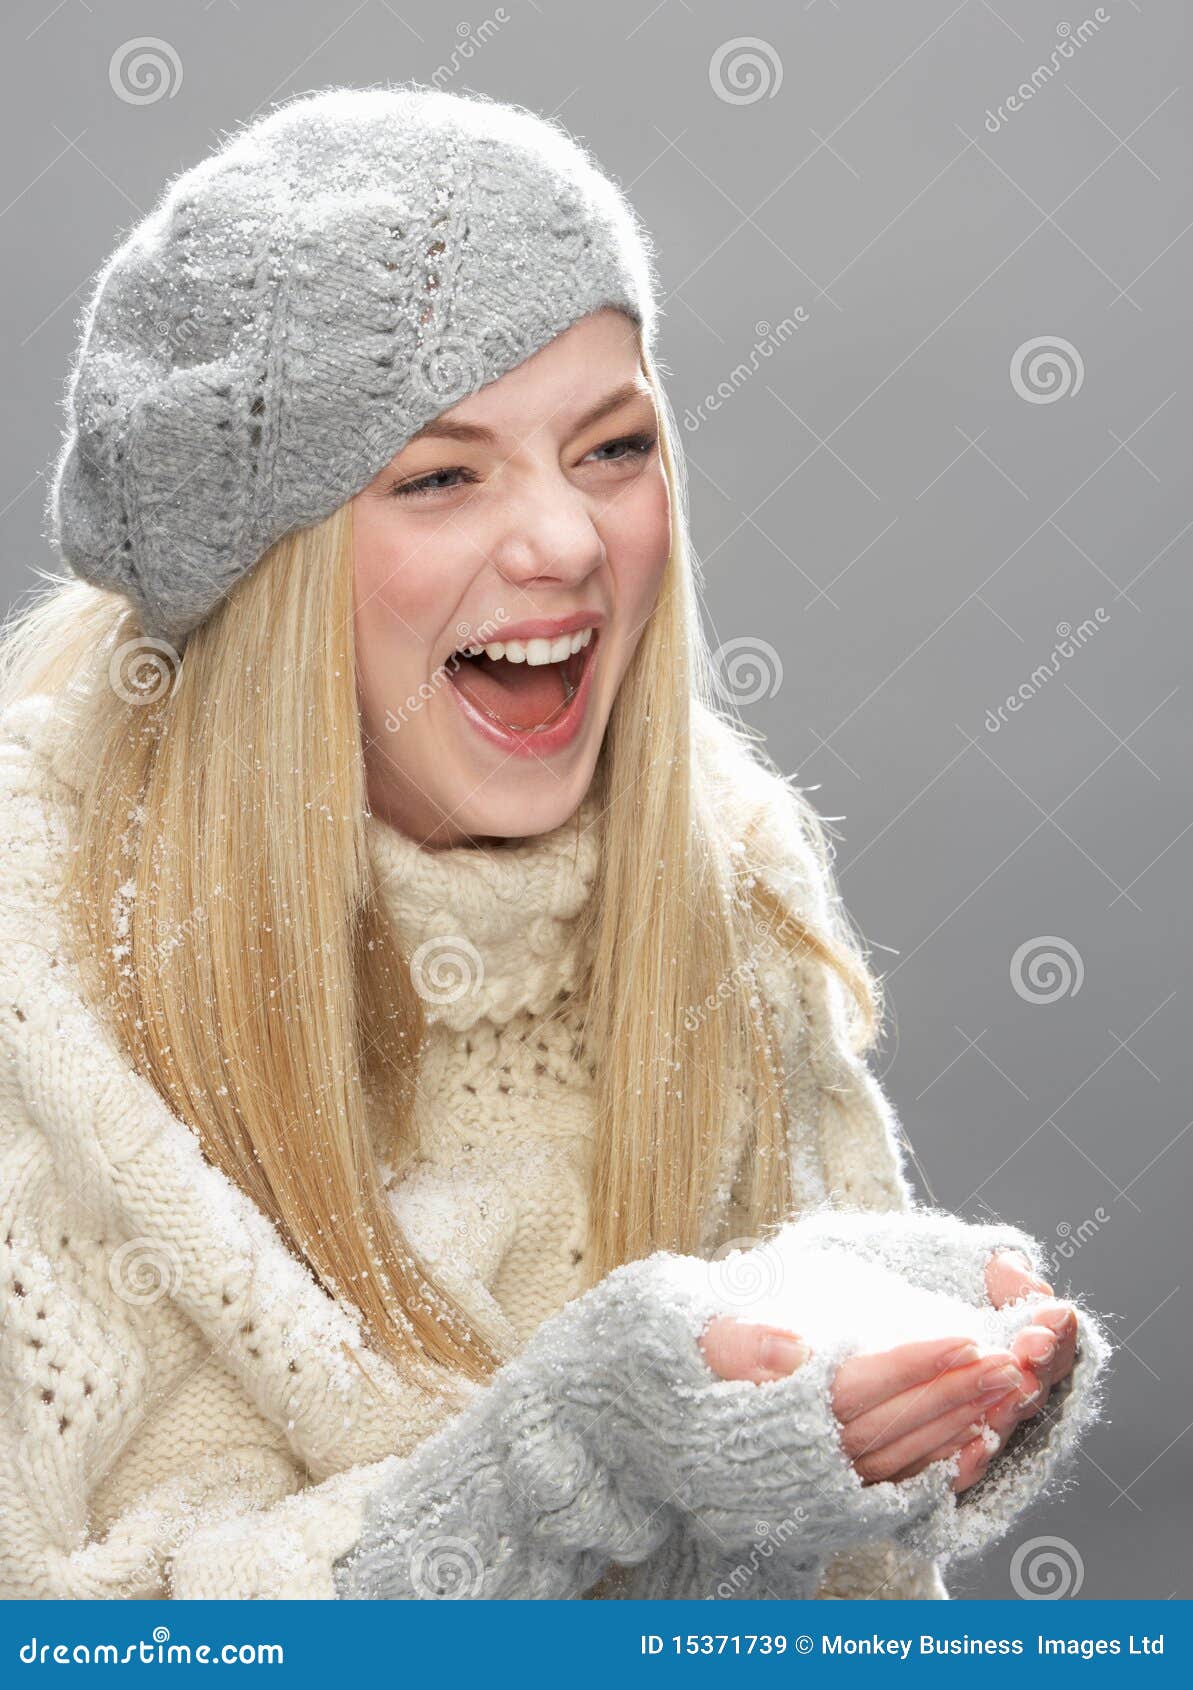 Teenage Girl Wearing Warm Winter Clothes in Studio Stock Image - Image ...